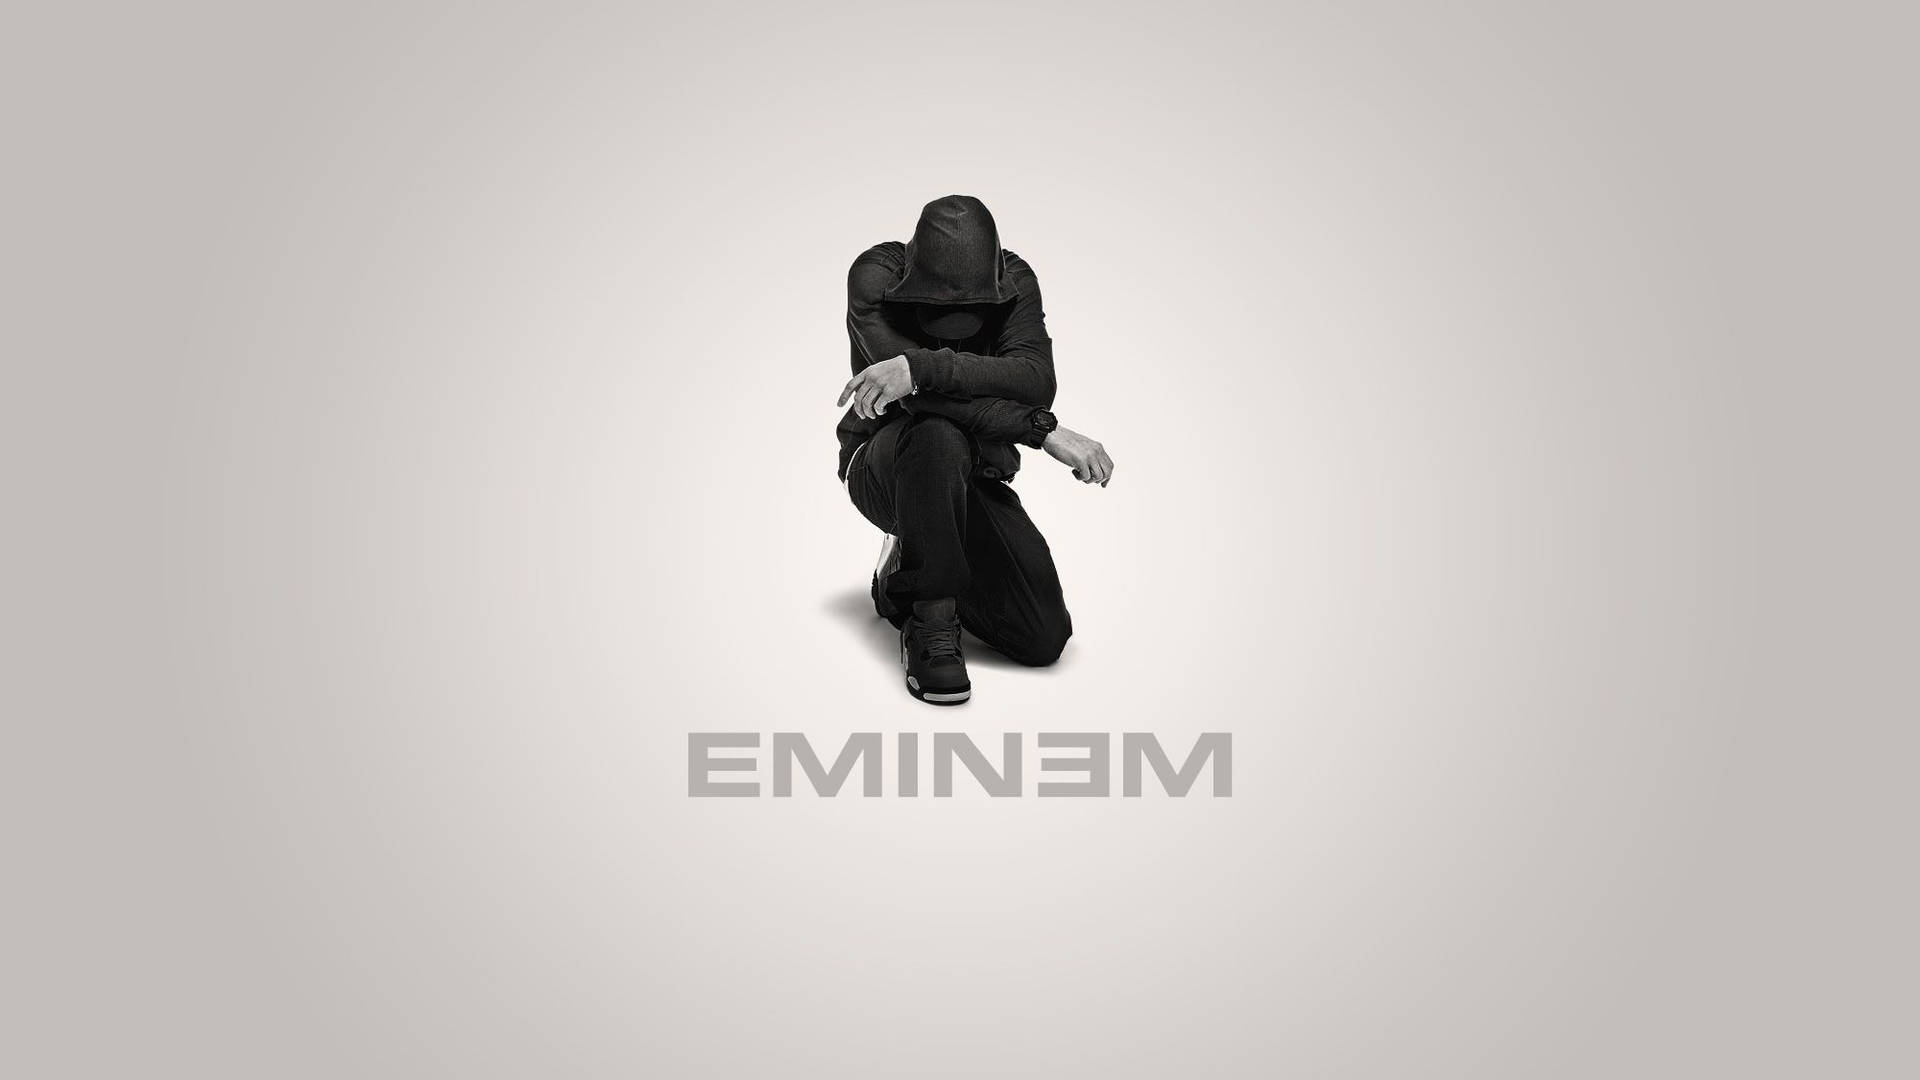 2000X1125 Eminem Wallpaper and Background